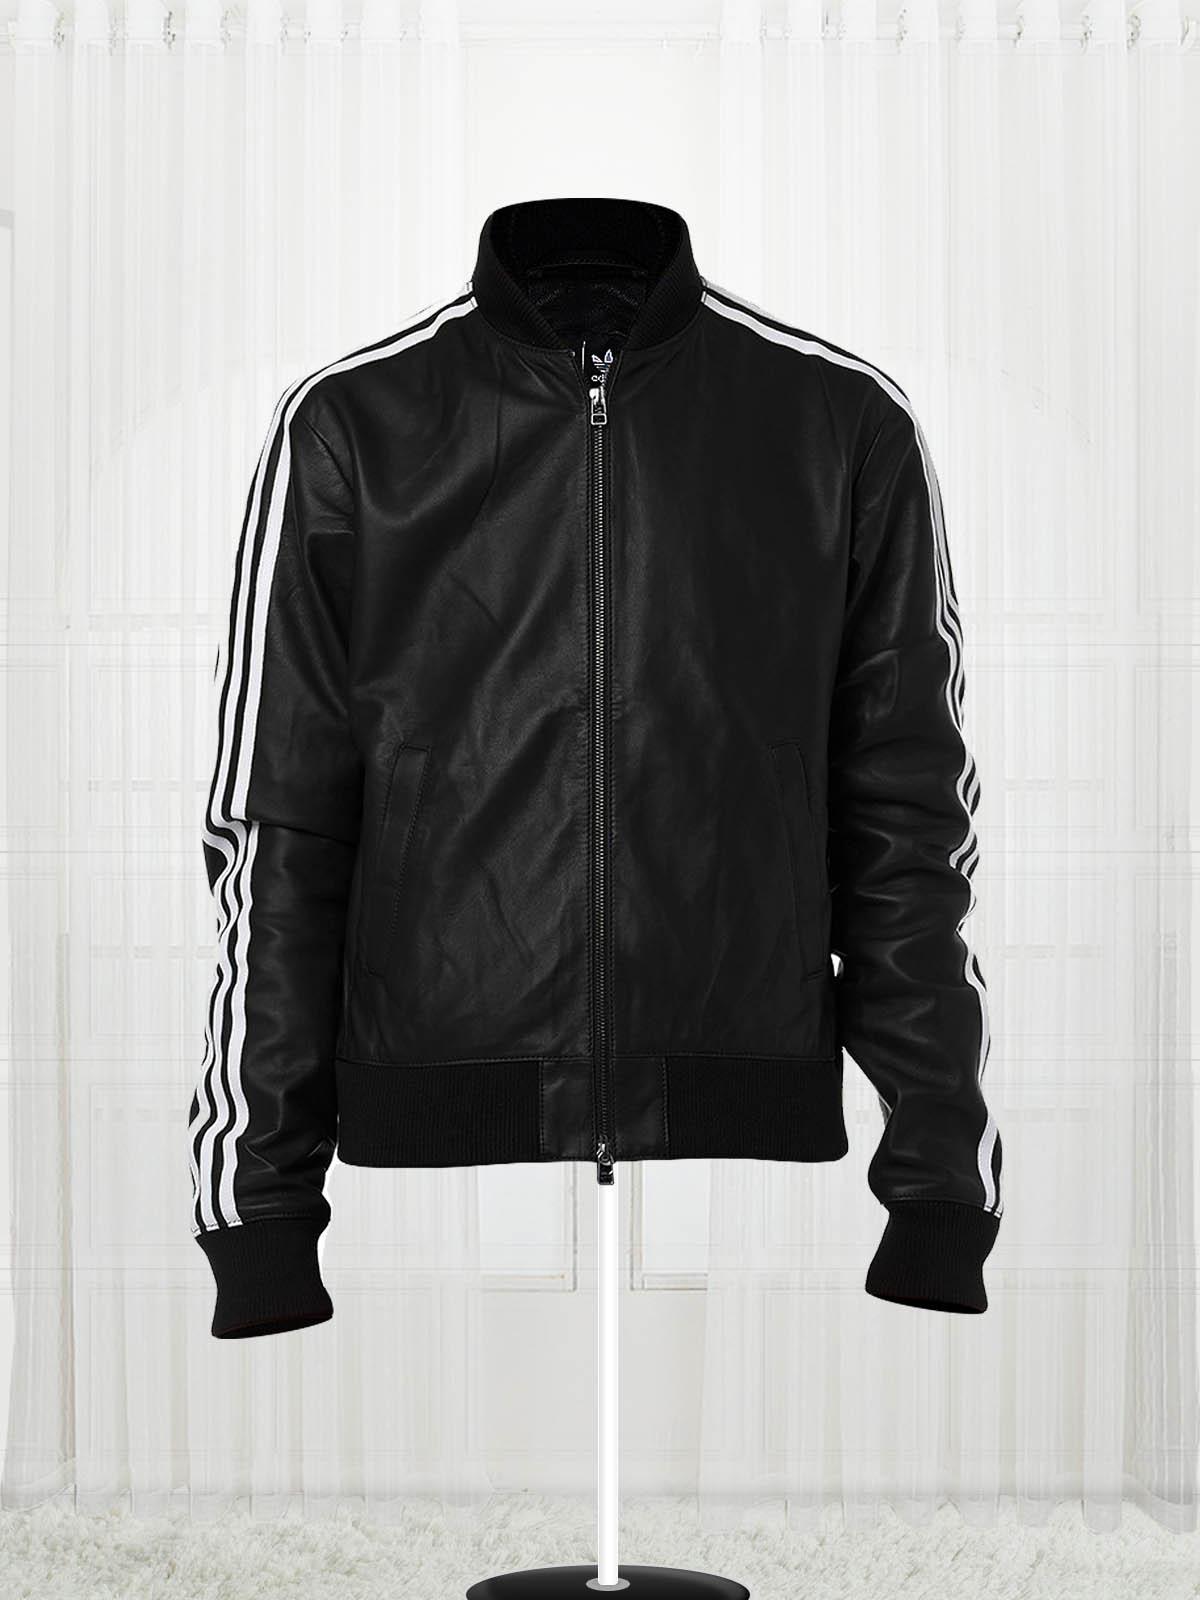 Addidas X Pharrell Williams Leather Jacket - A2 Jackets